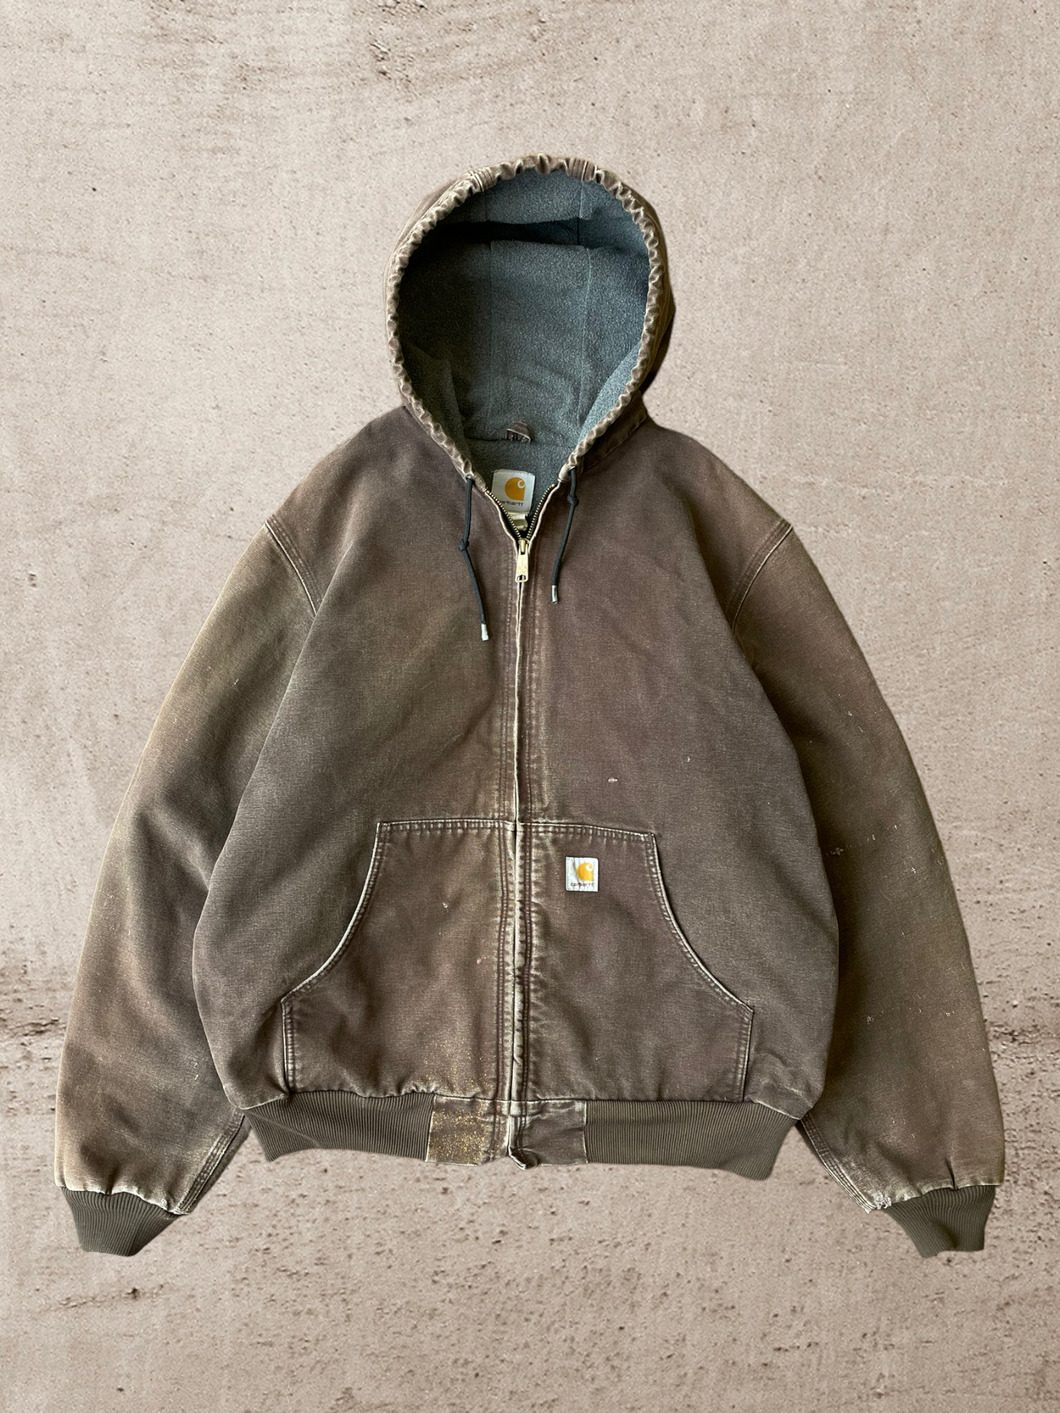 Vintage Carhartt Fleece Lined Hooded Jacket - Large